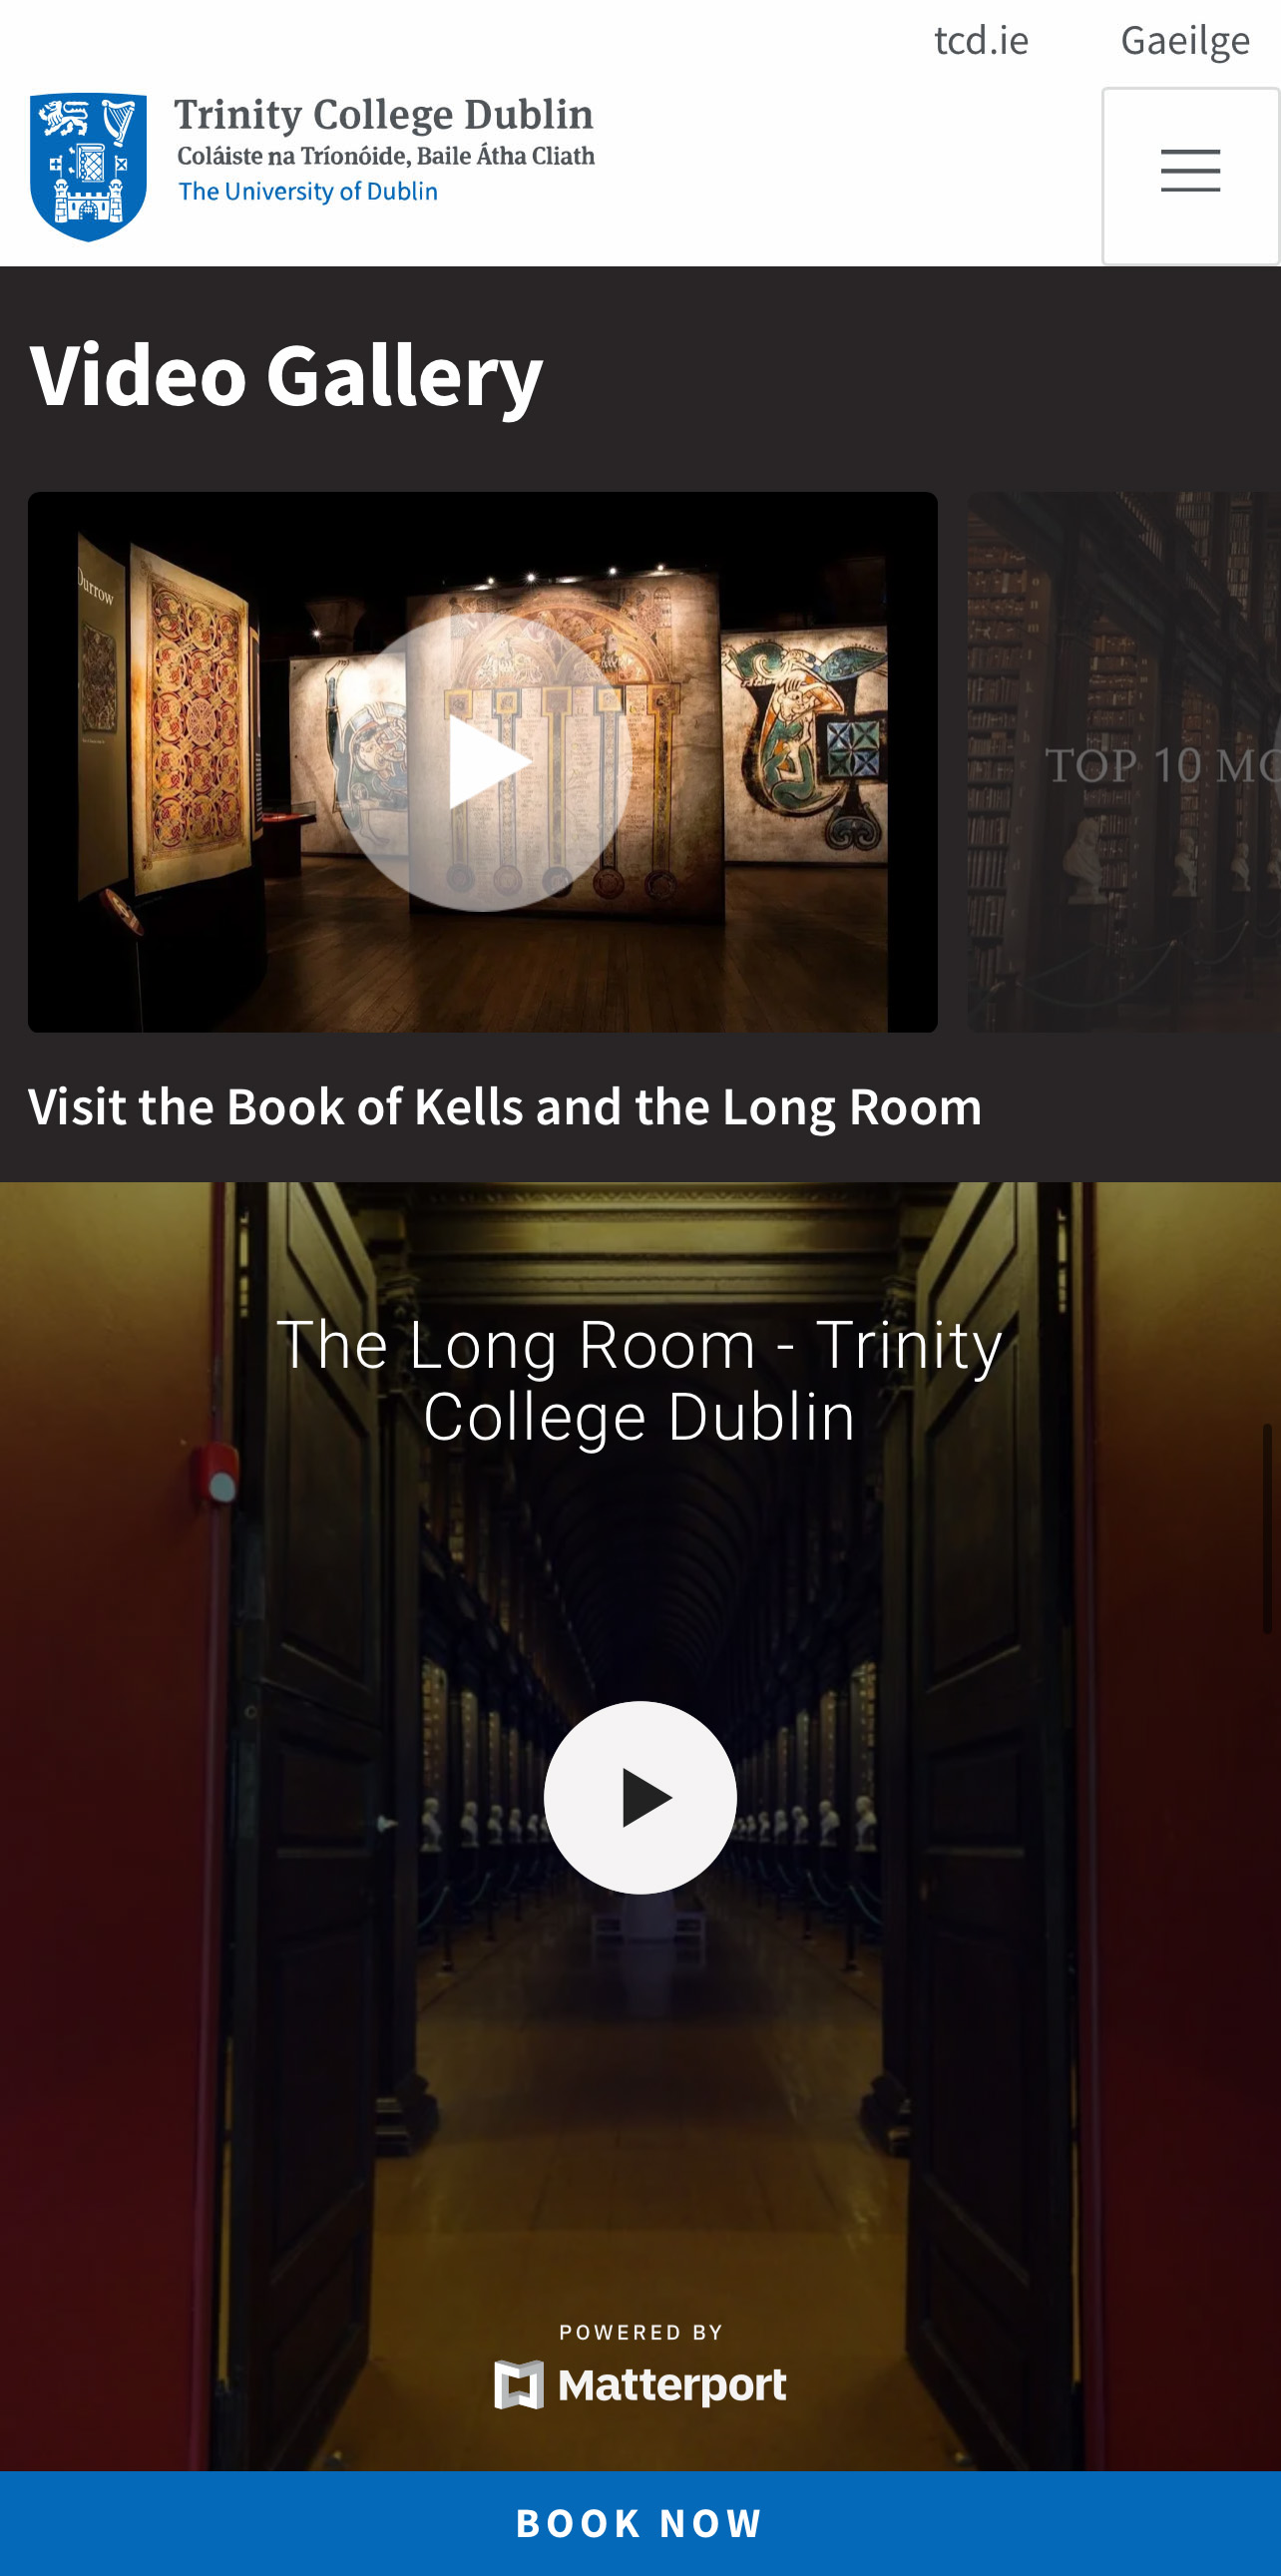 Visit Trinity College Website Dublin by Ebow The Digital Agency